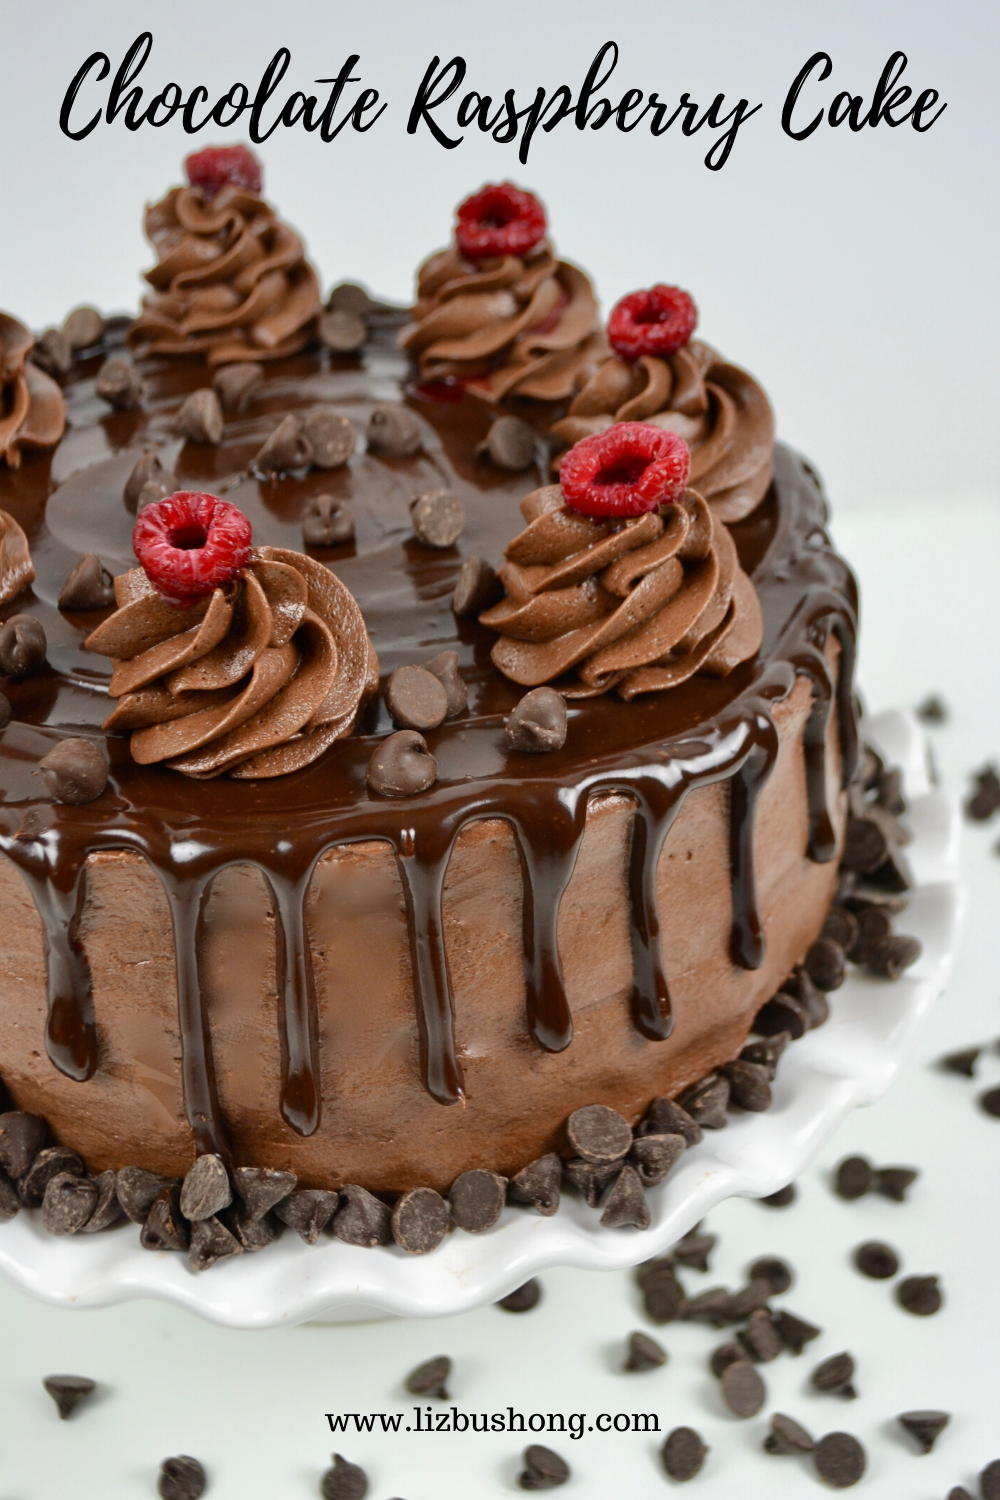 Chocolate Raspberry Layer Cake Recipe lizbushong.com